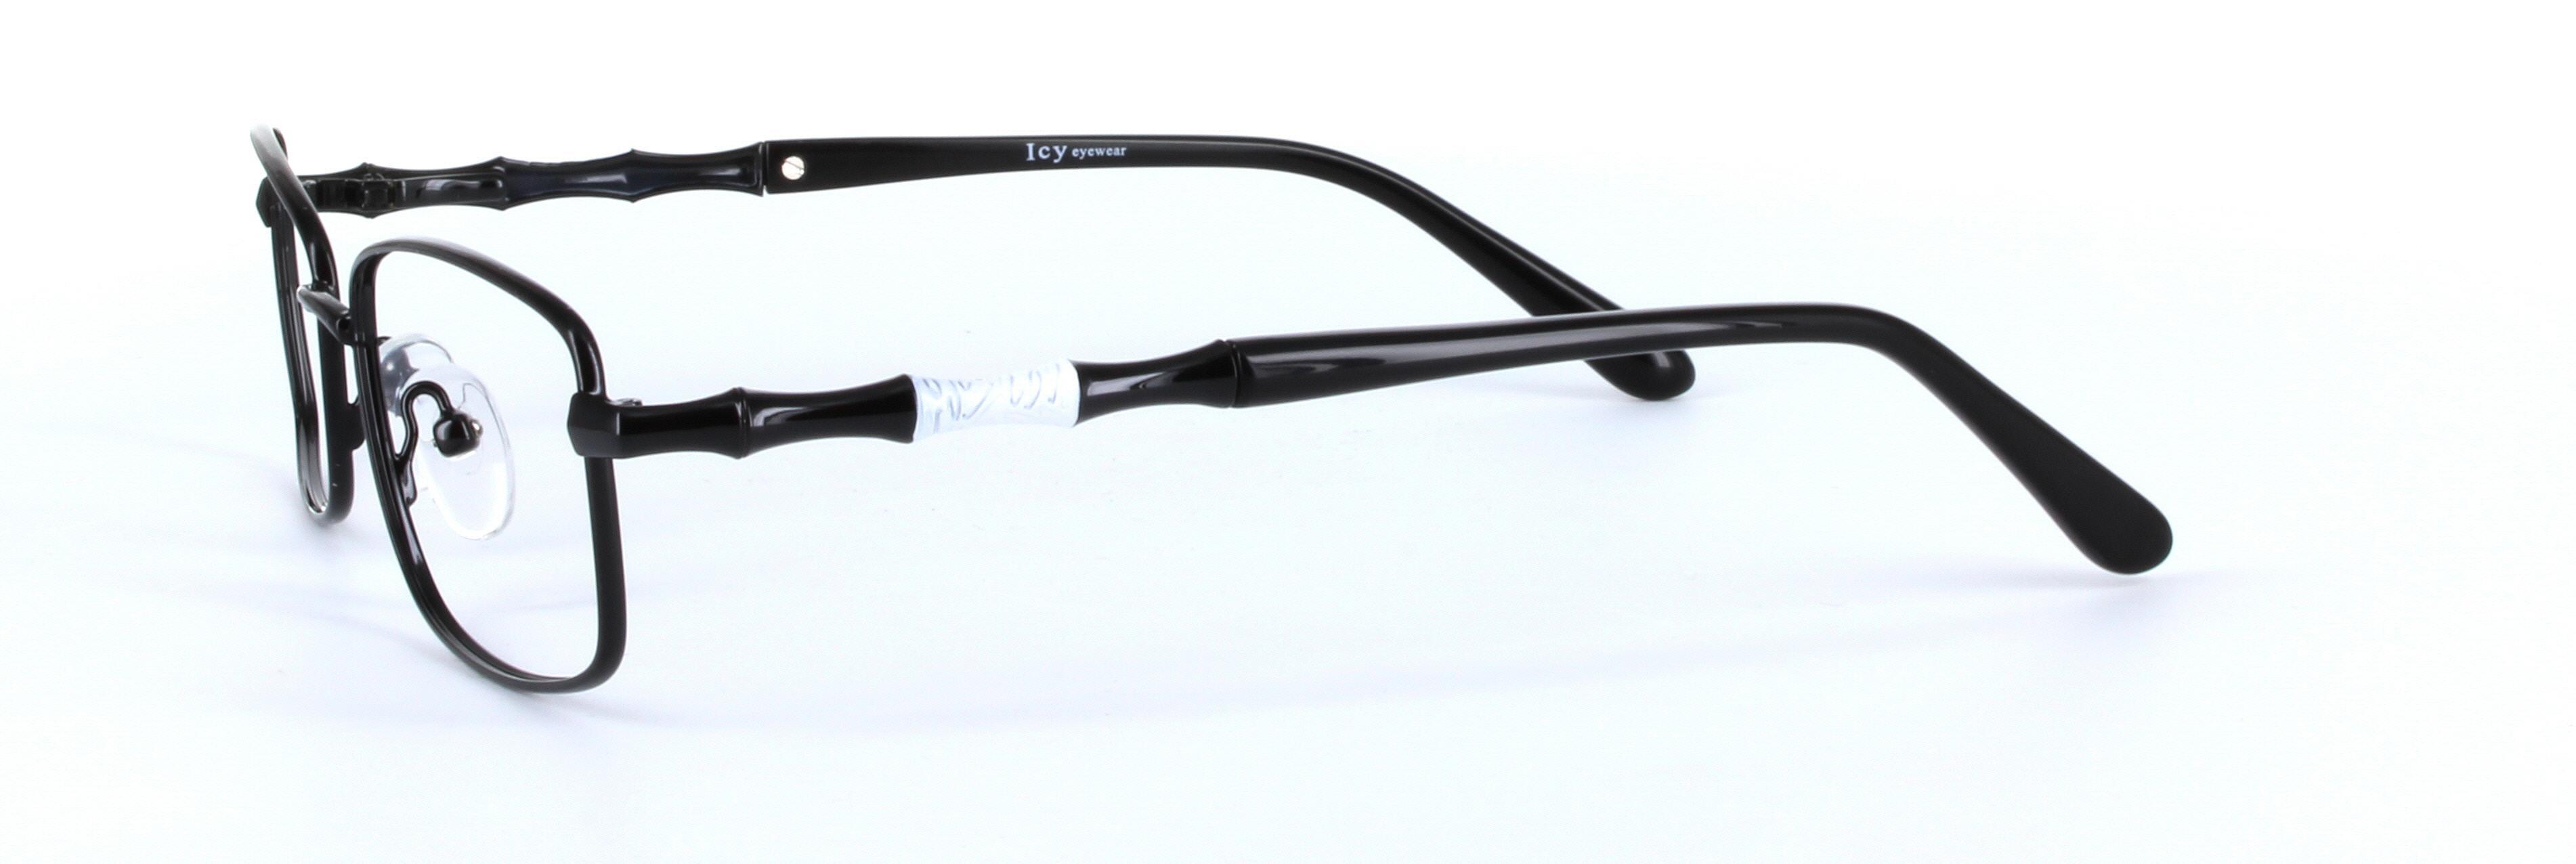 Kirsty Black Full Rim Oval Rectangular Metal Glasses - Image View 2